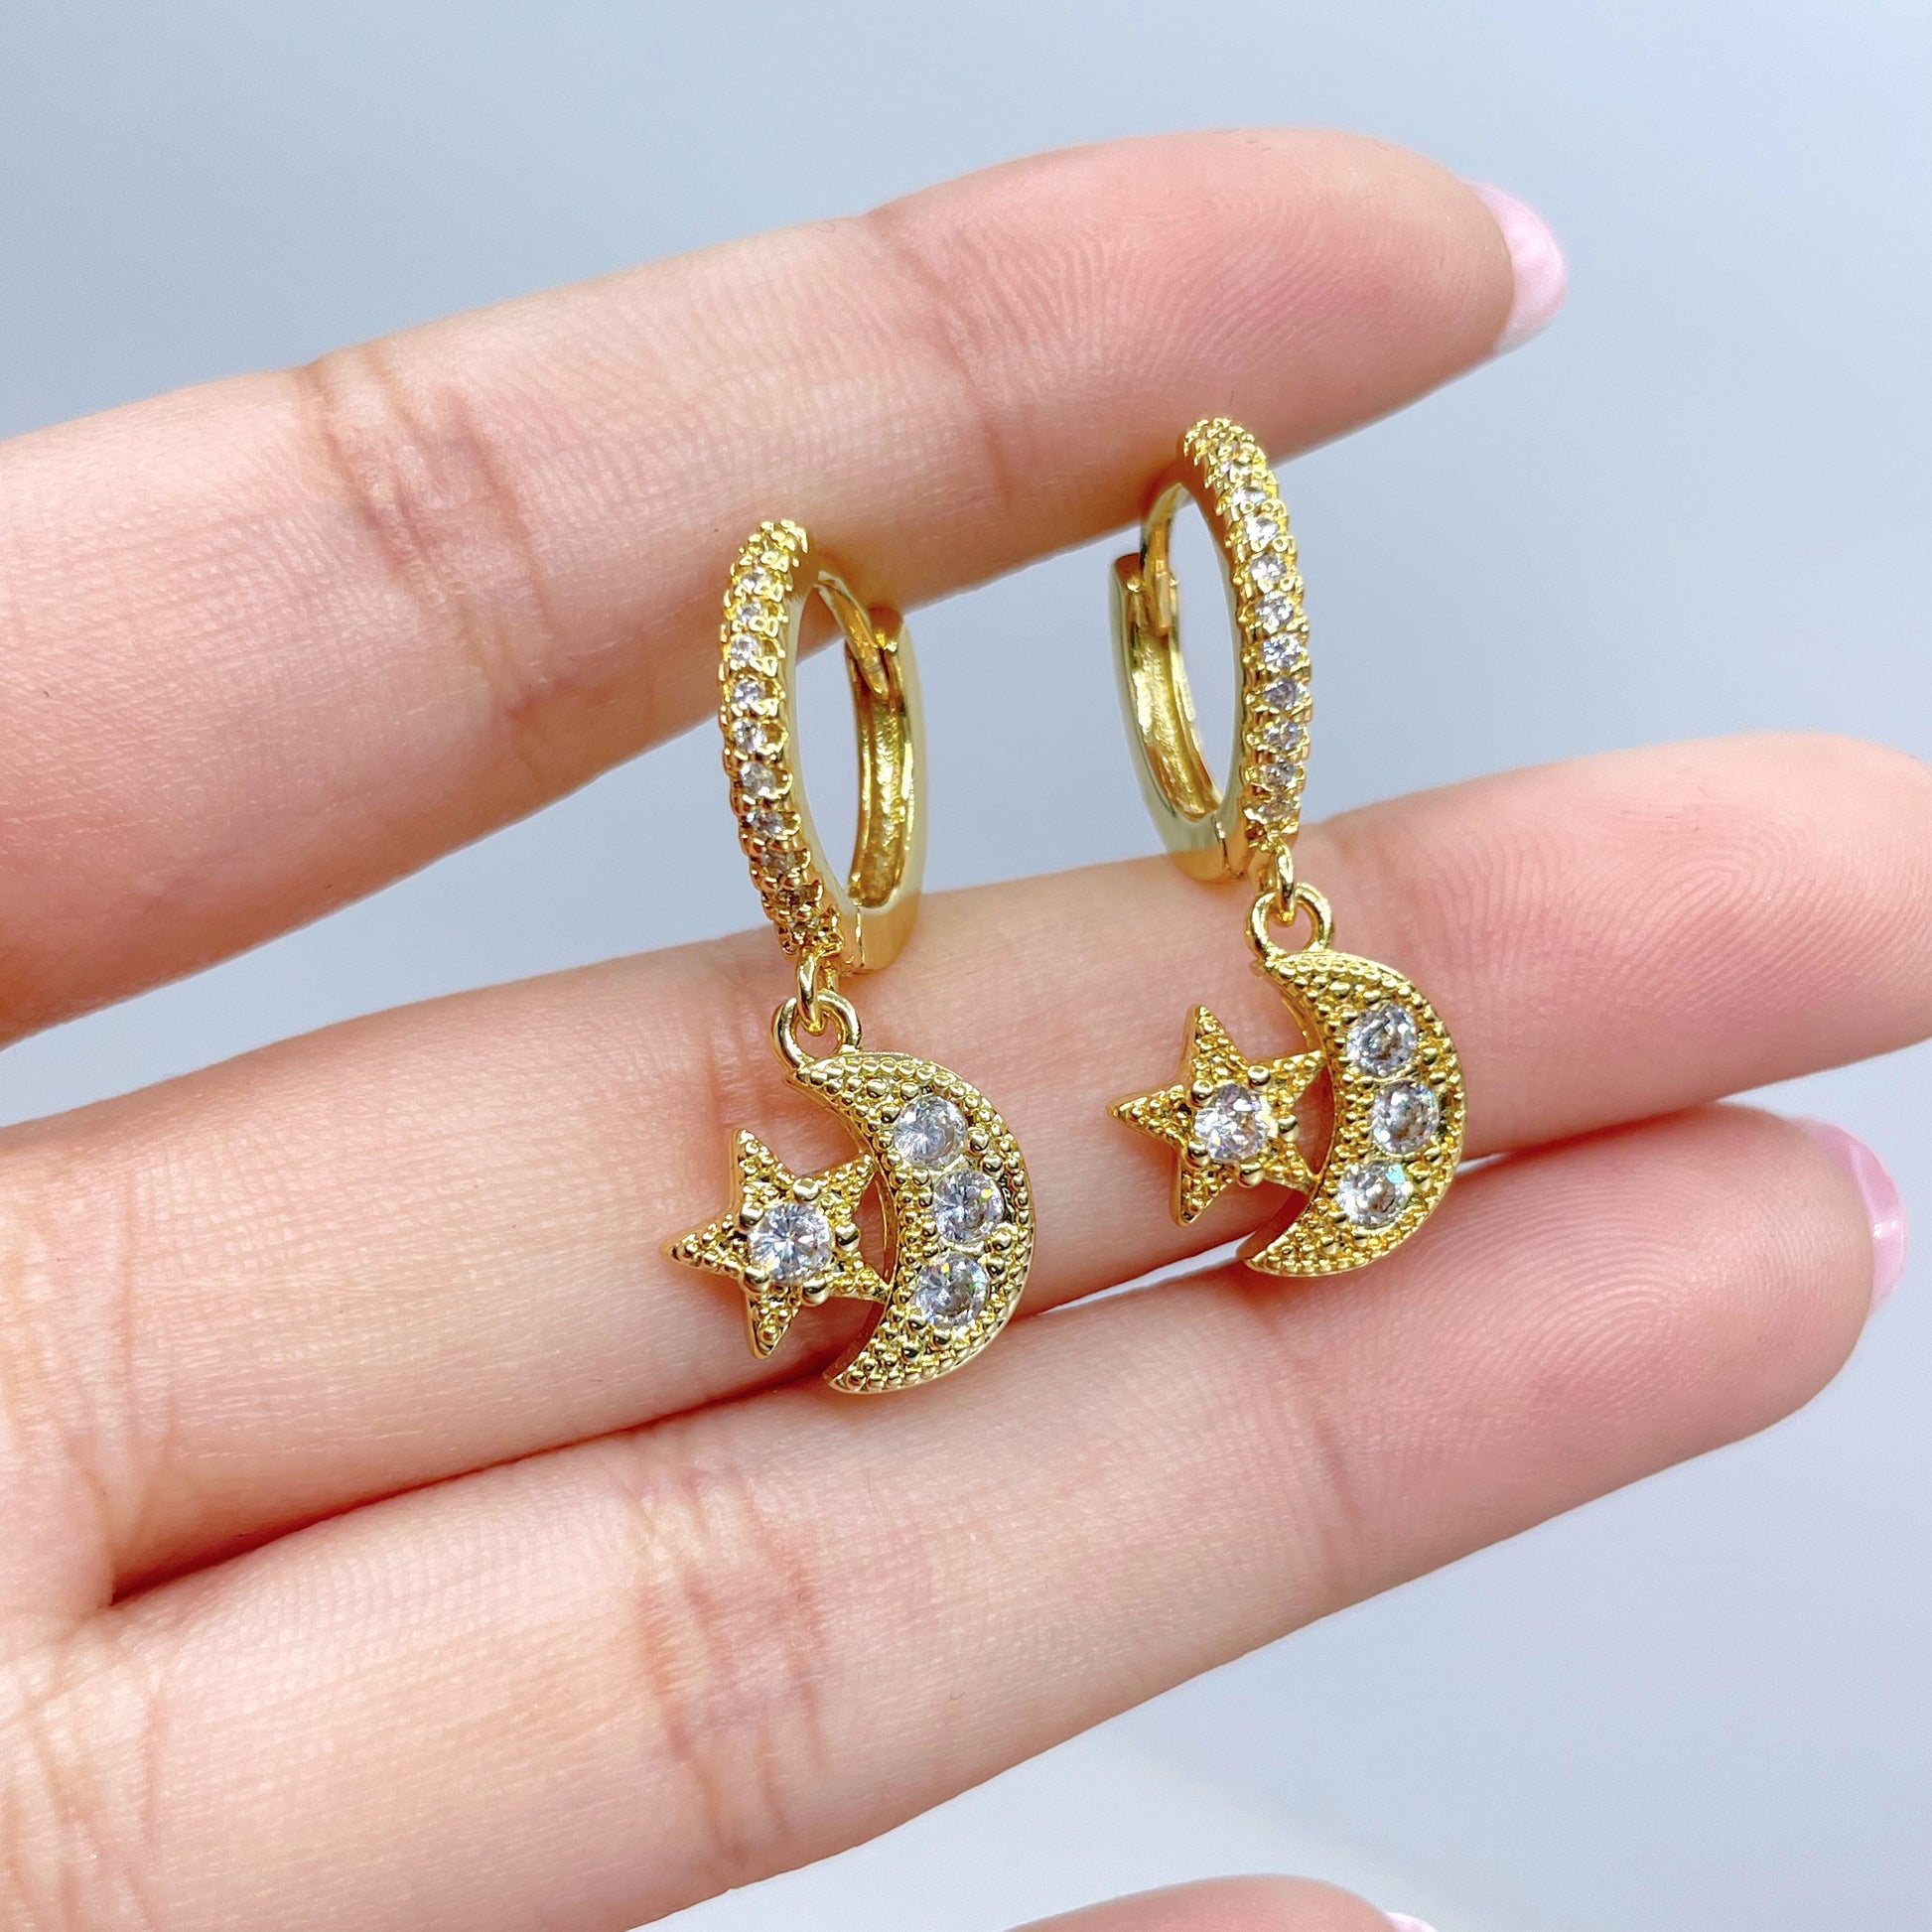 18k Gold Filled 15mm Huggie Earrings with Micro Cubic Zirconia Moon & Star Shape Charm, Dangle Earrings, Wholesale Jewelry Making Supplies